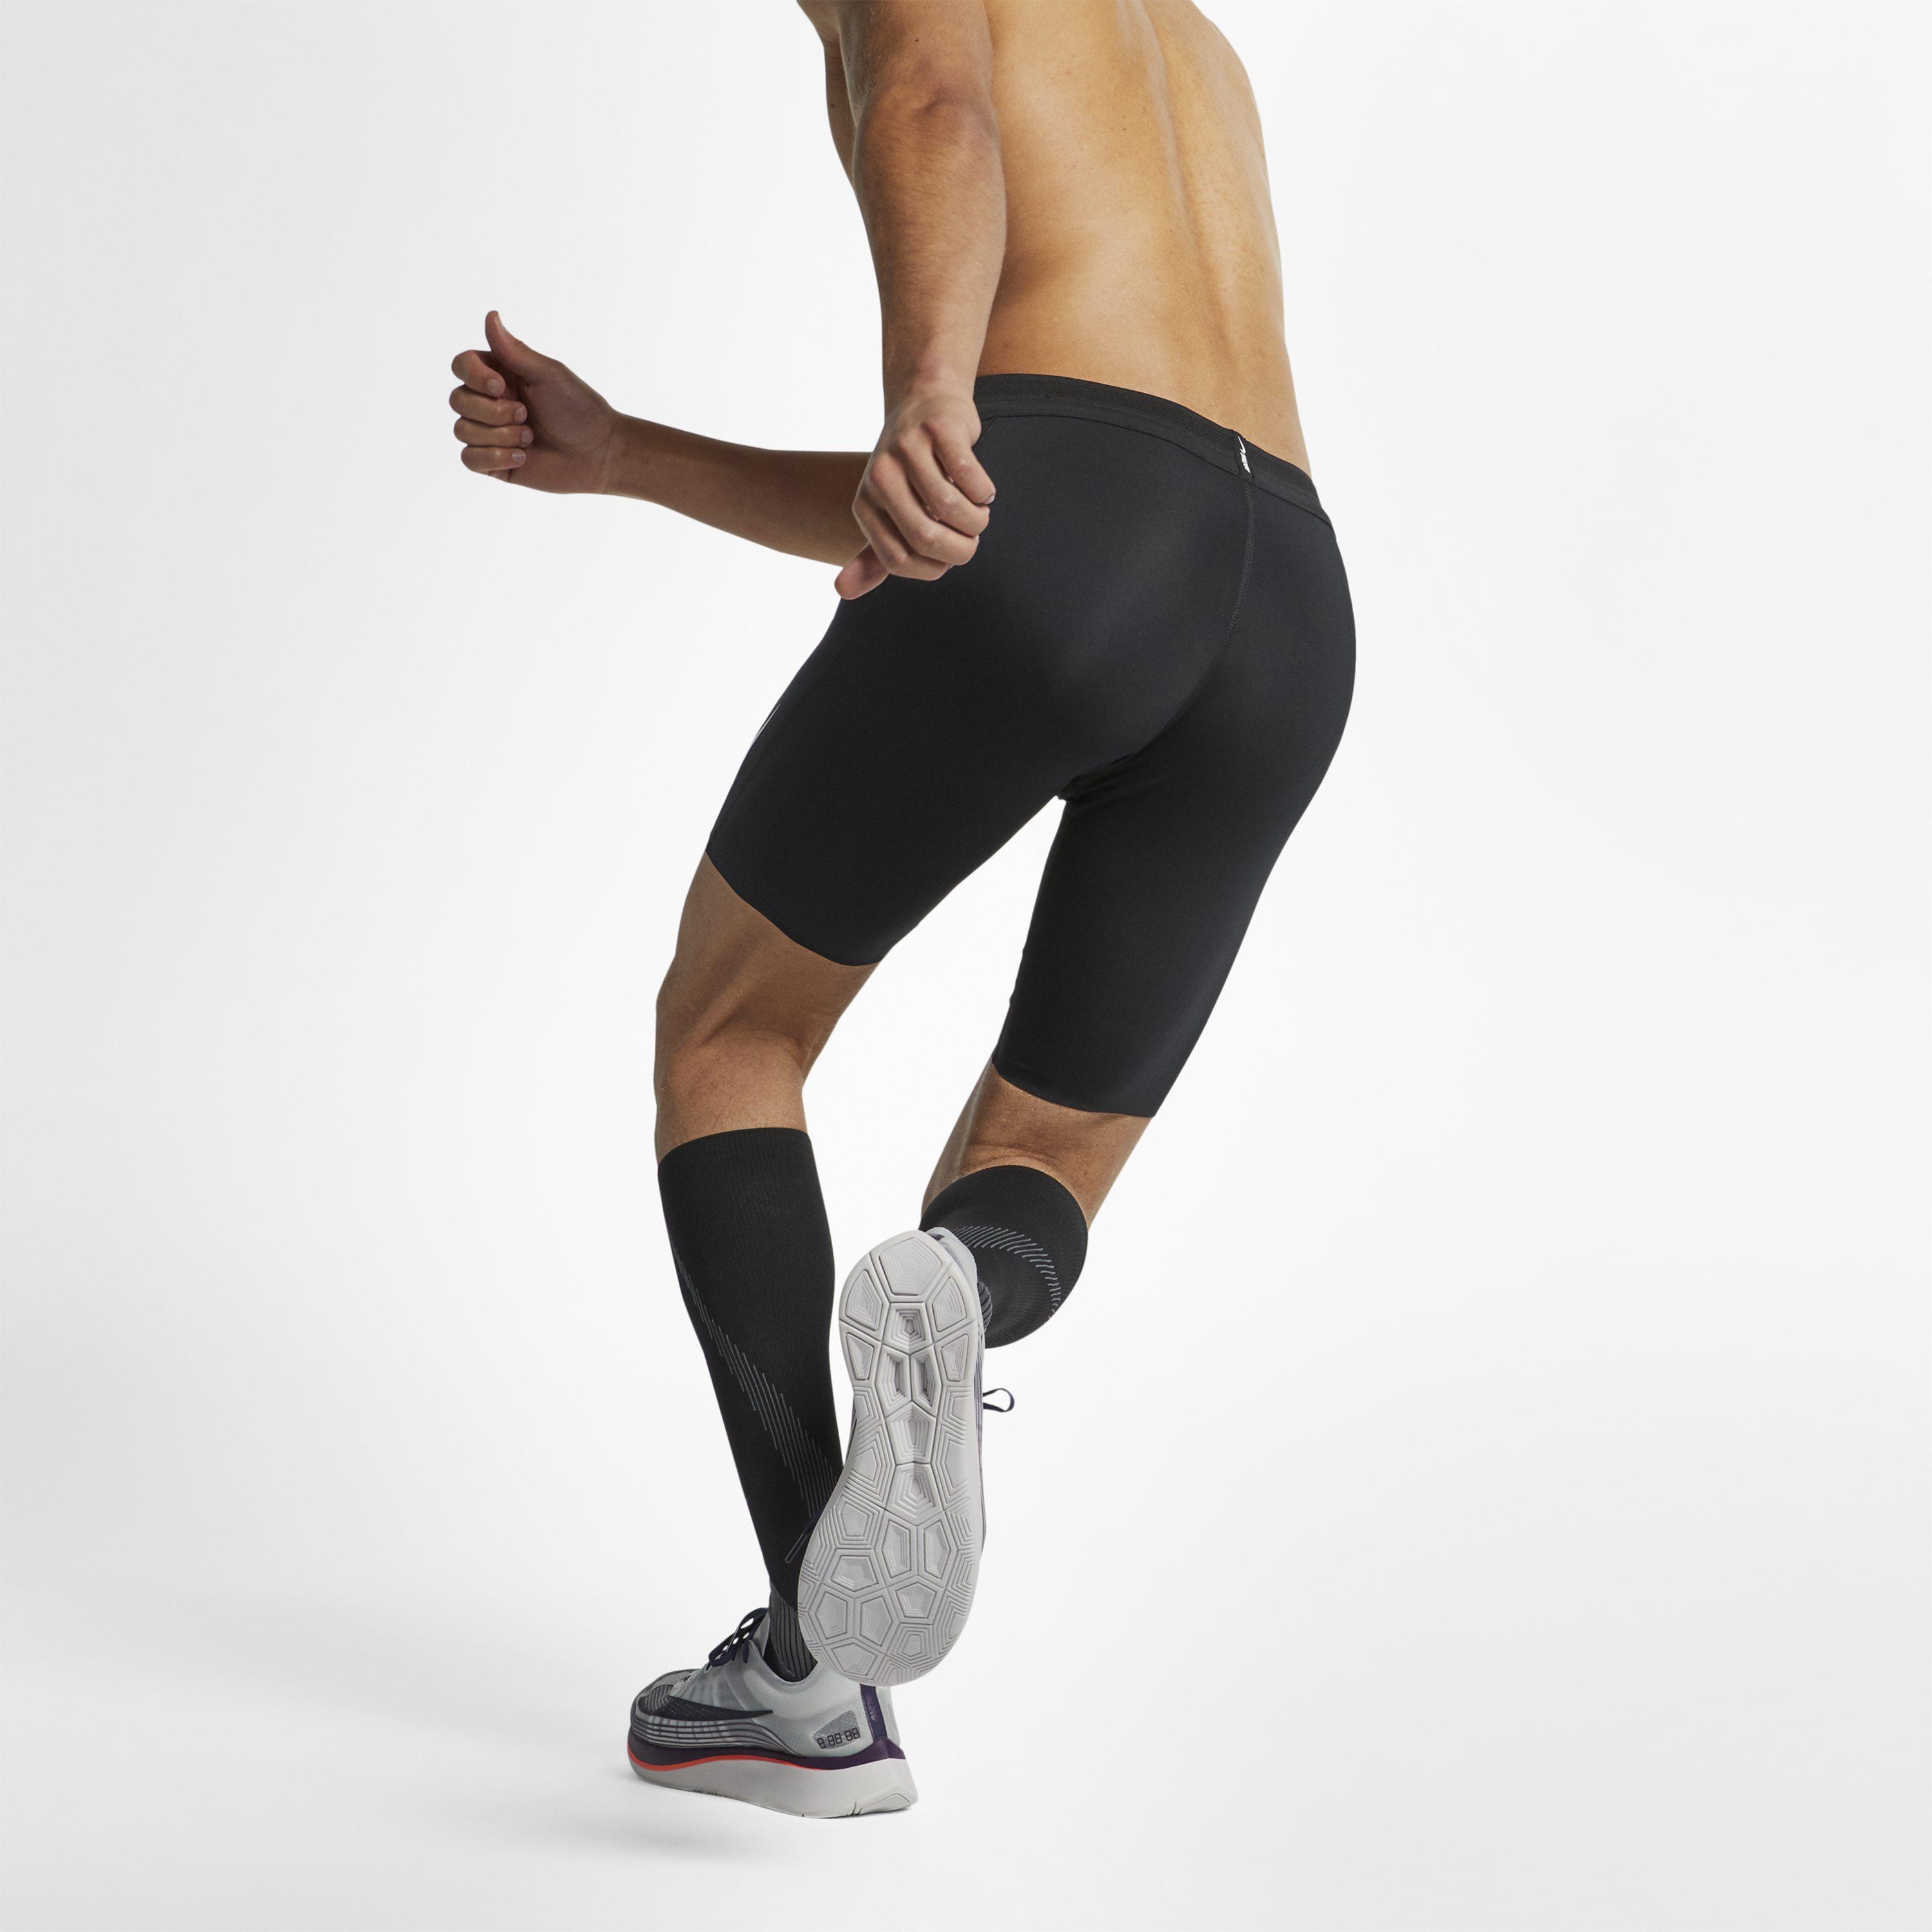 Nike Men's AeroSwift Tight Short - Black/White - Running Bath